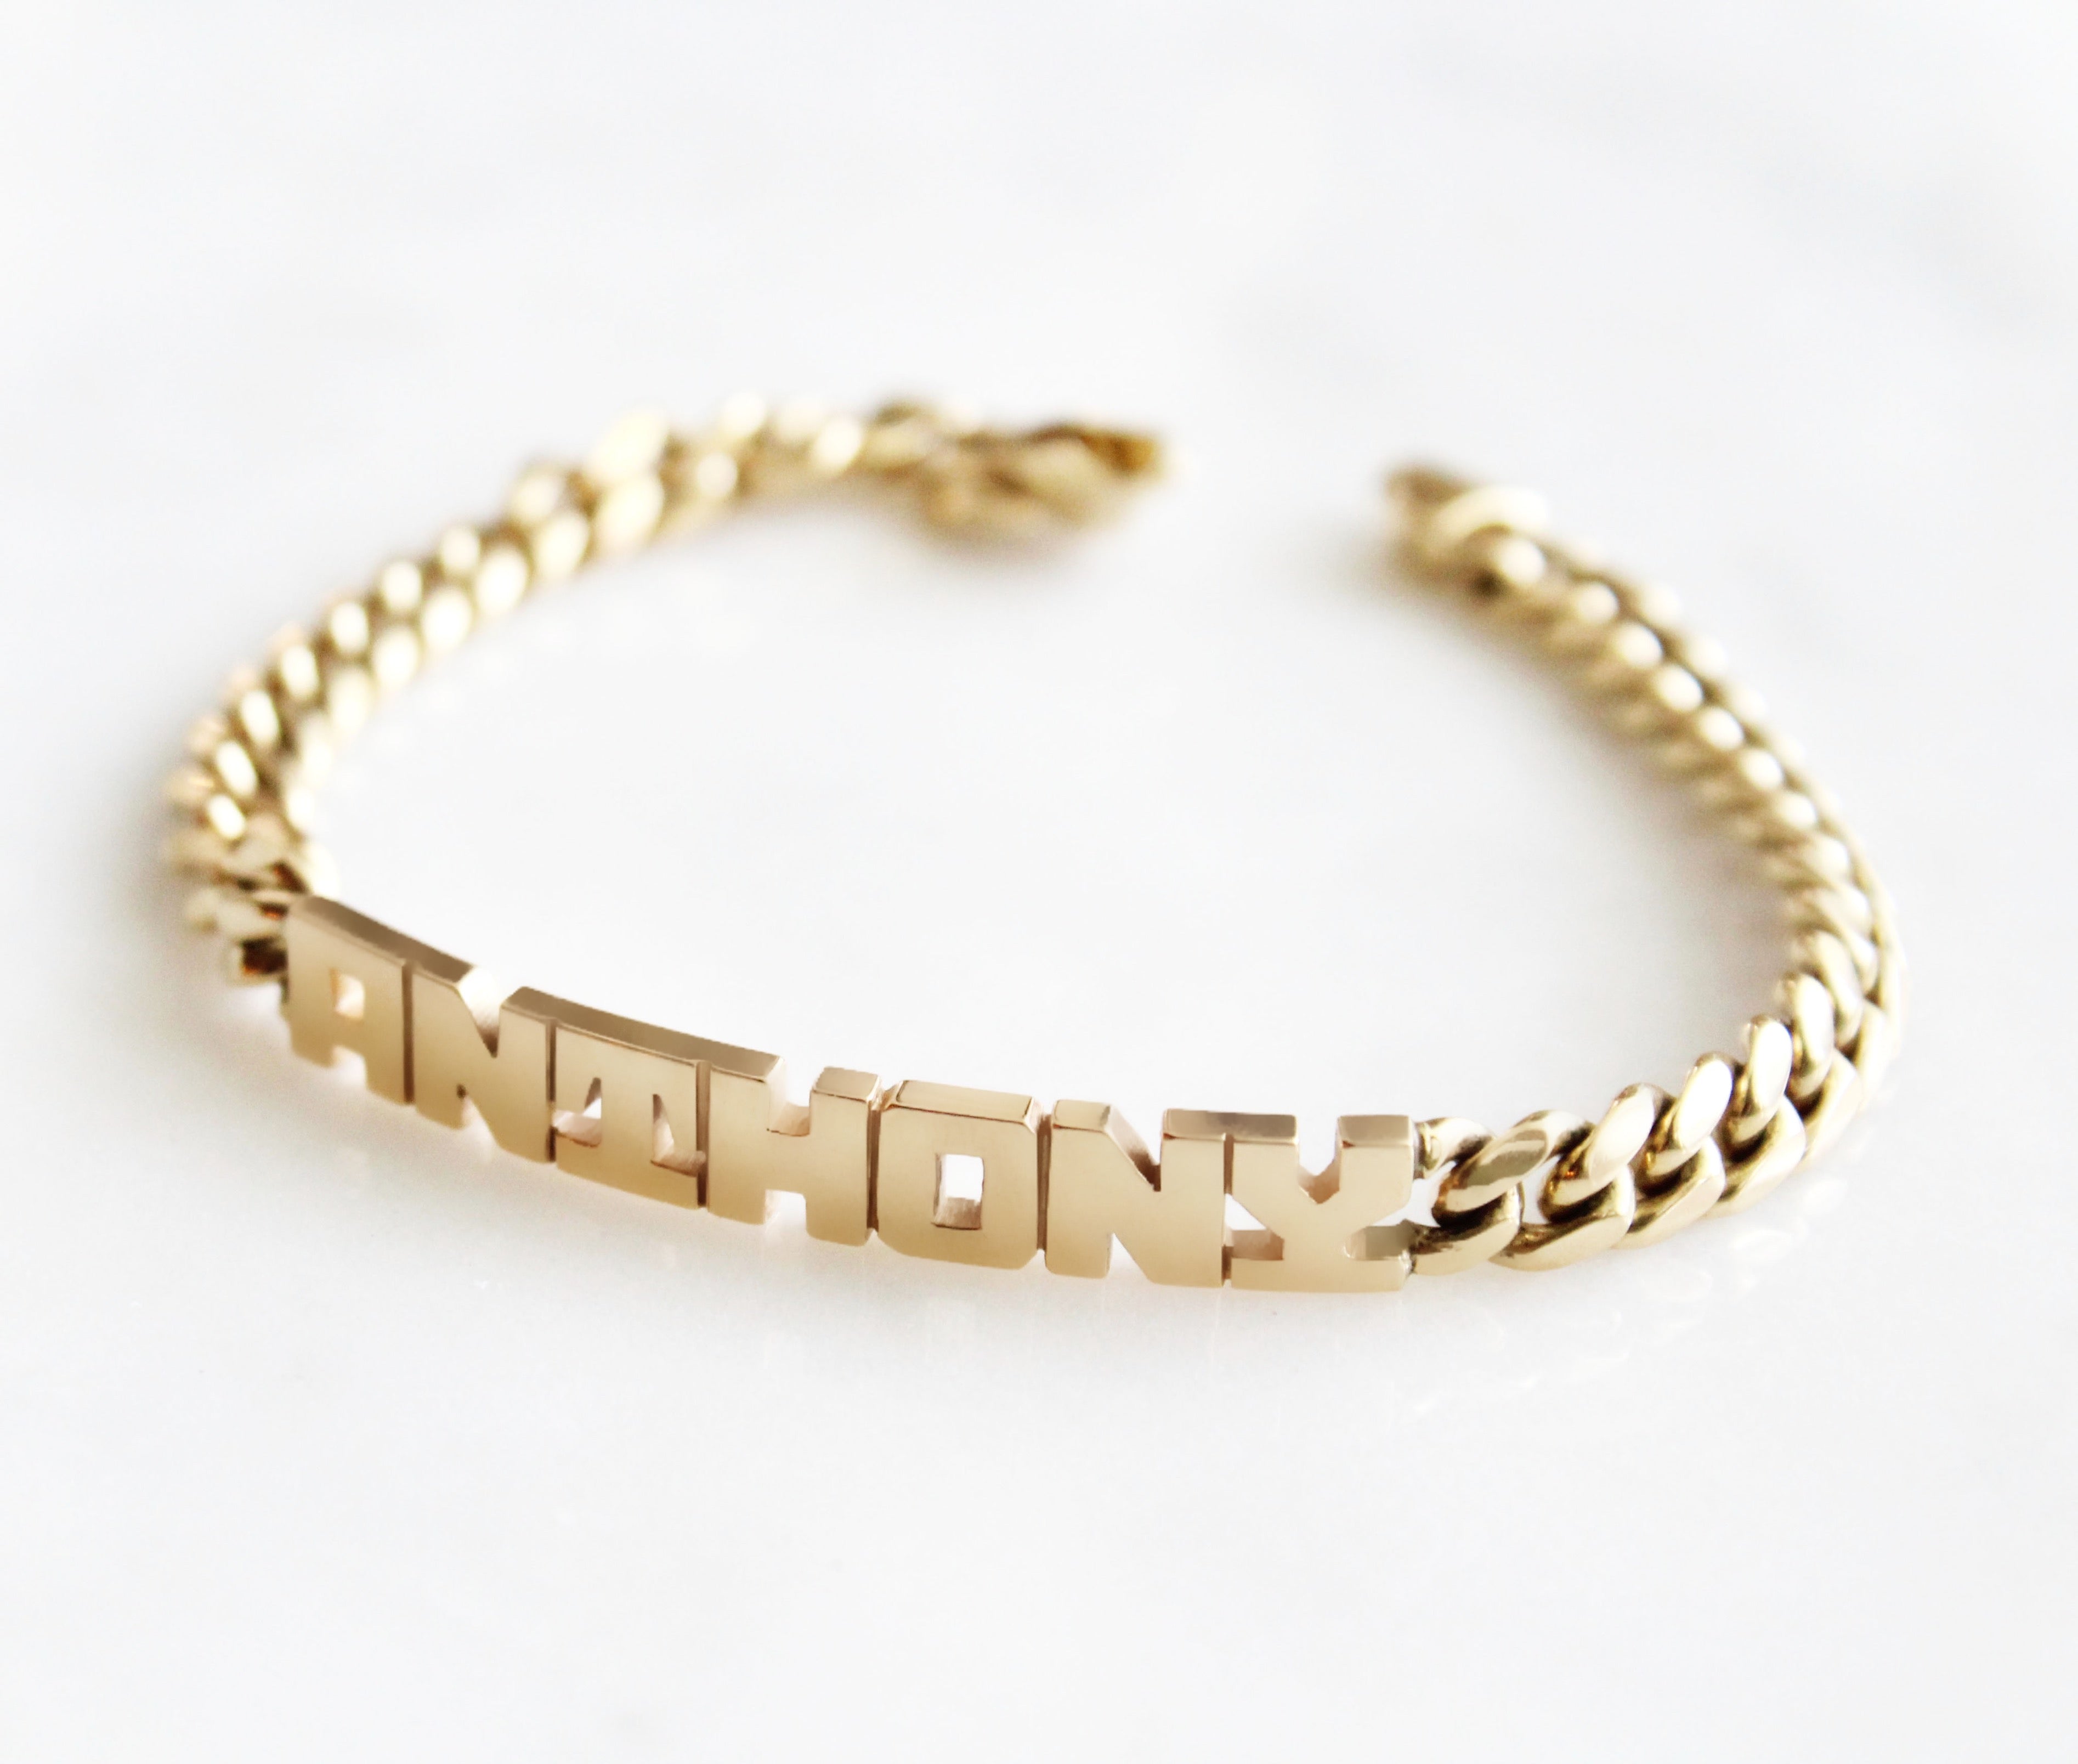 Kimiya Jewelers Name Chain Bracelet